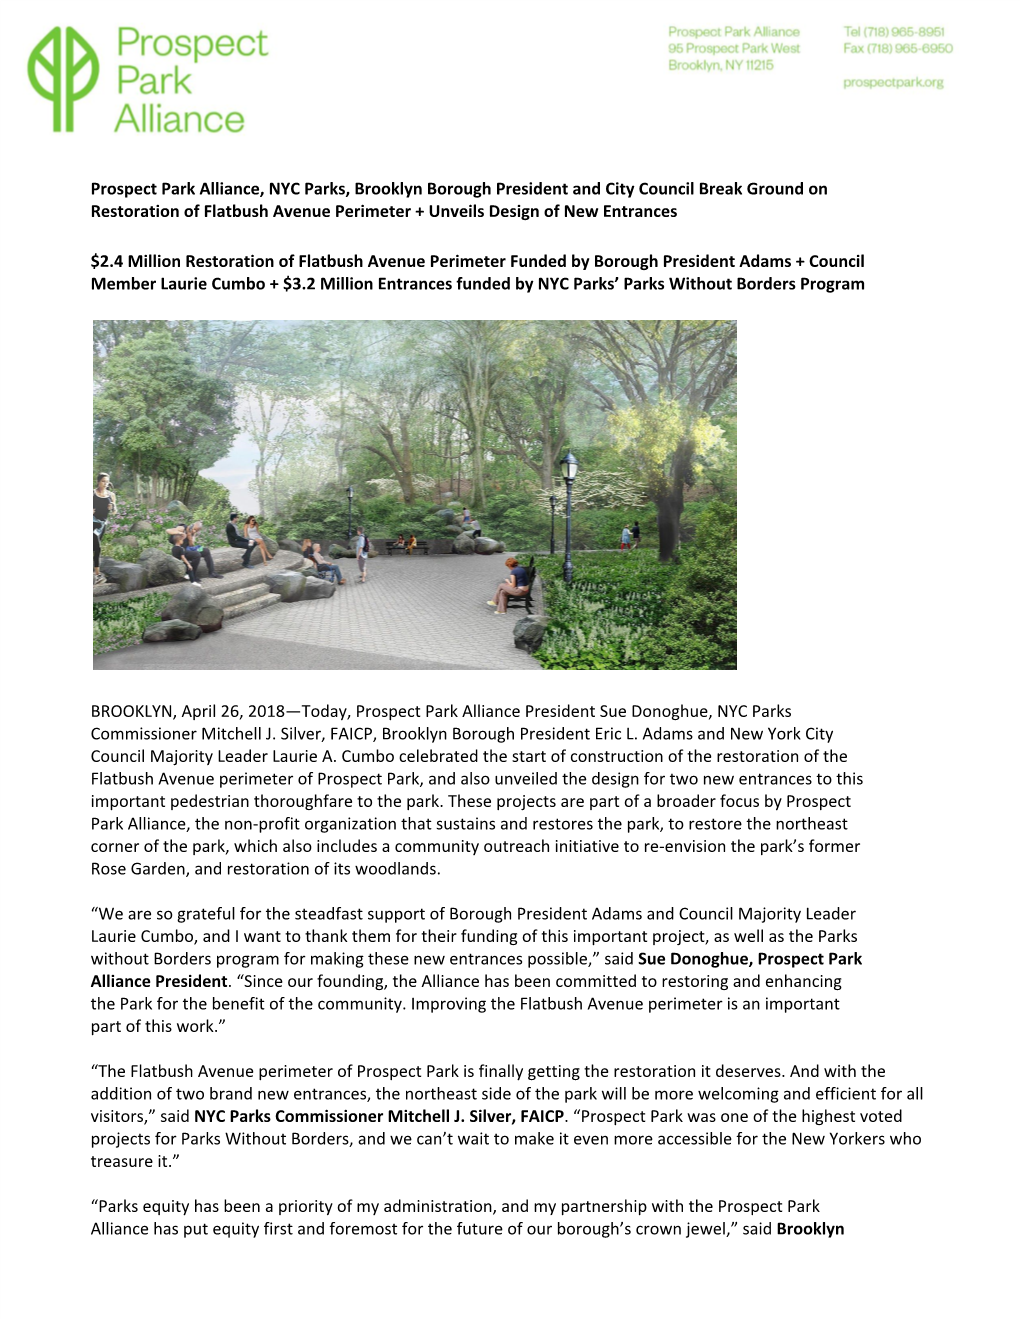 Prospect Park Alliance, NYC Parks, Brooklyn Borough President And